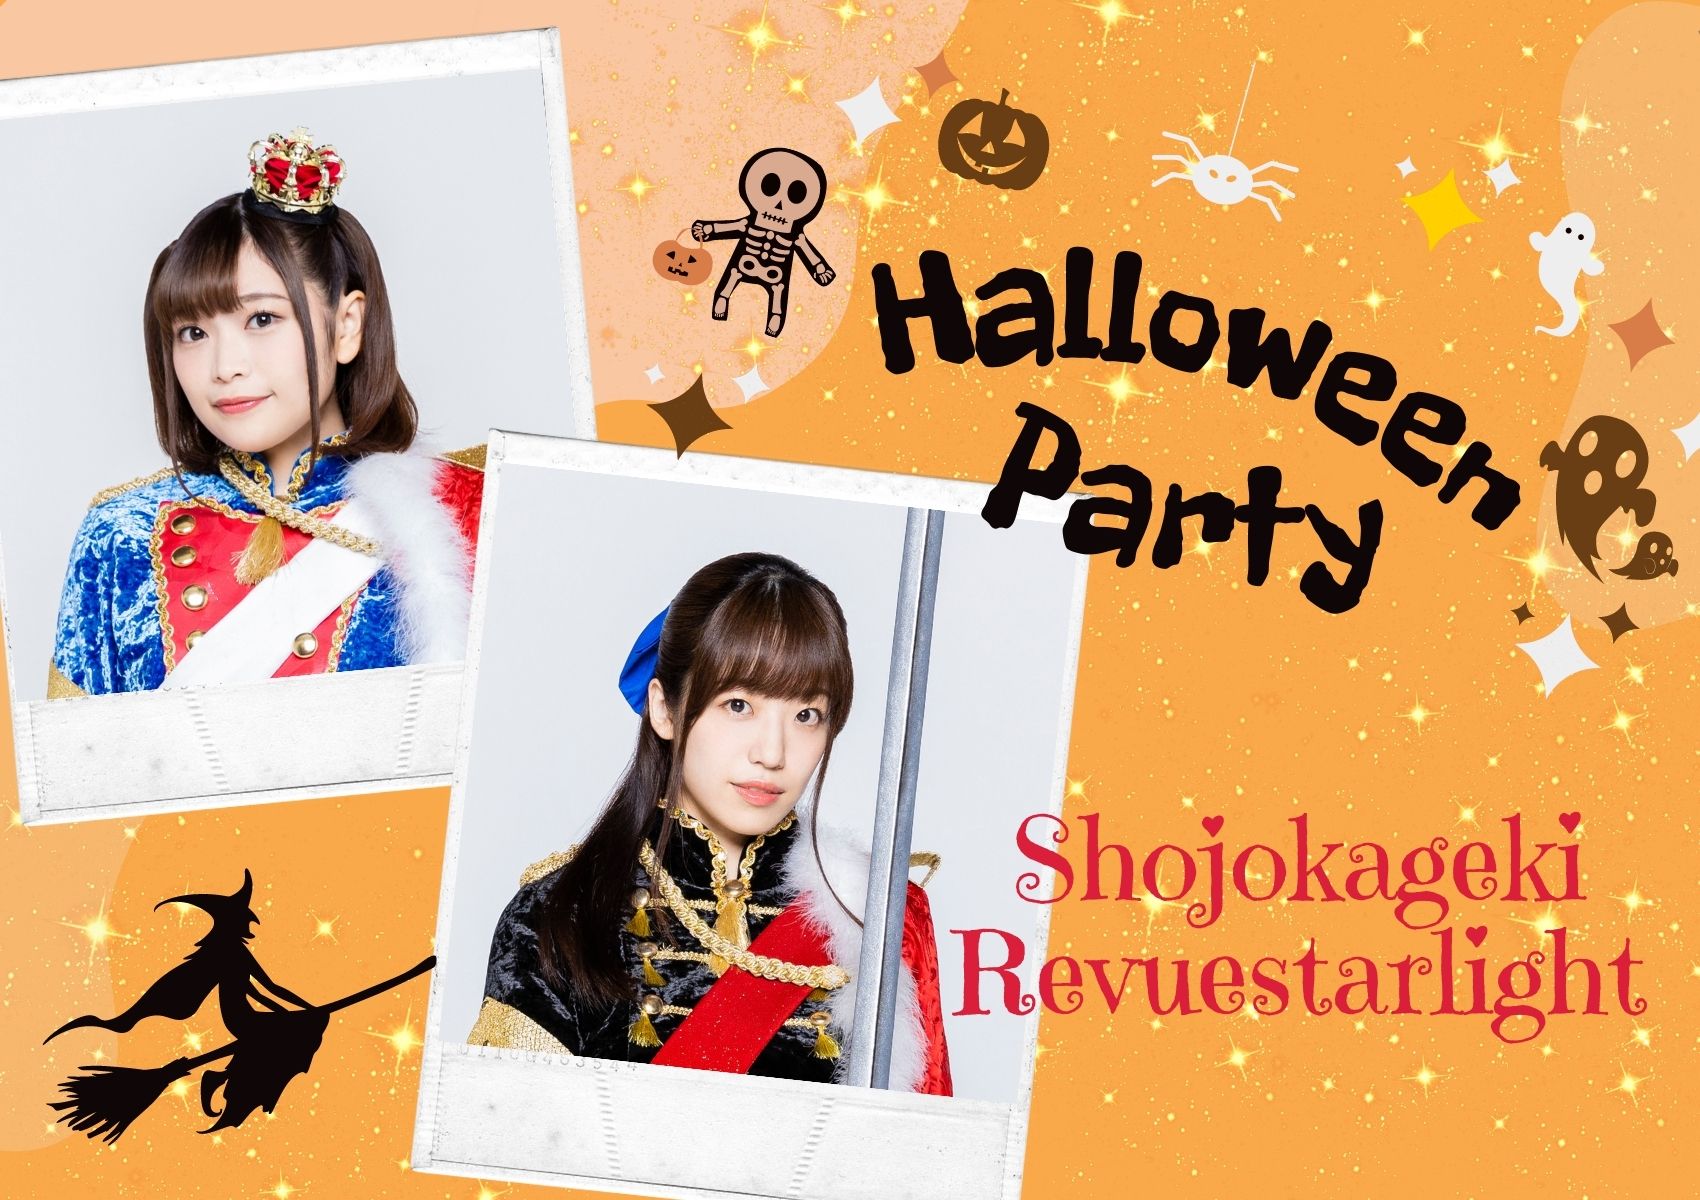 "Revue Starlight" Halloween Party 2022